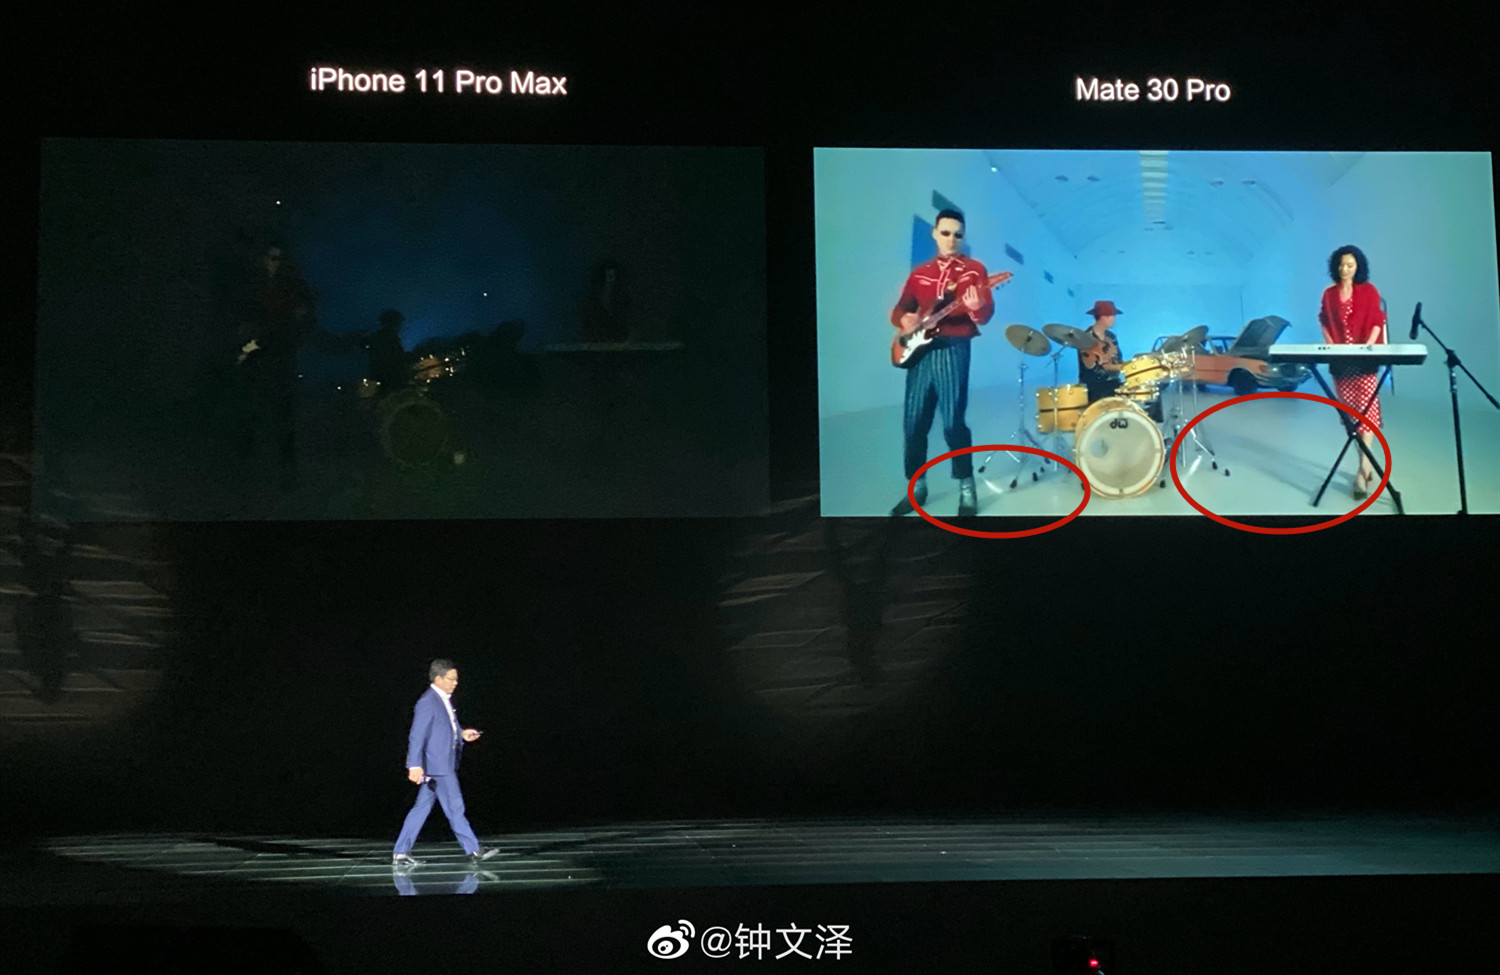 燈光來源明顯不同？網友質疑 Huawei Mate 30 Pro 發佈會故意抹黑 iPhone；來看圖評理吧！ 1